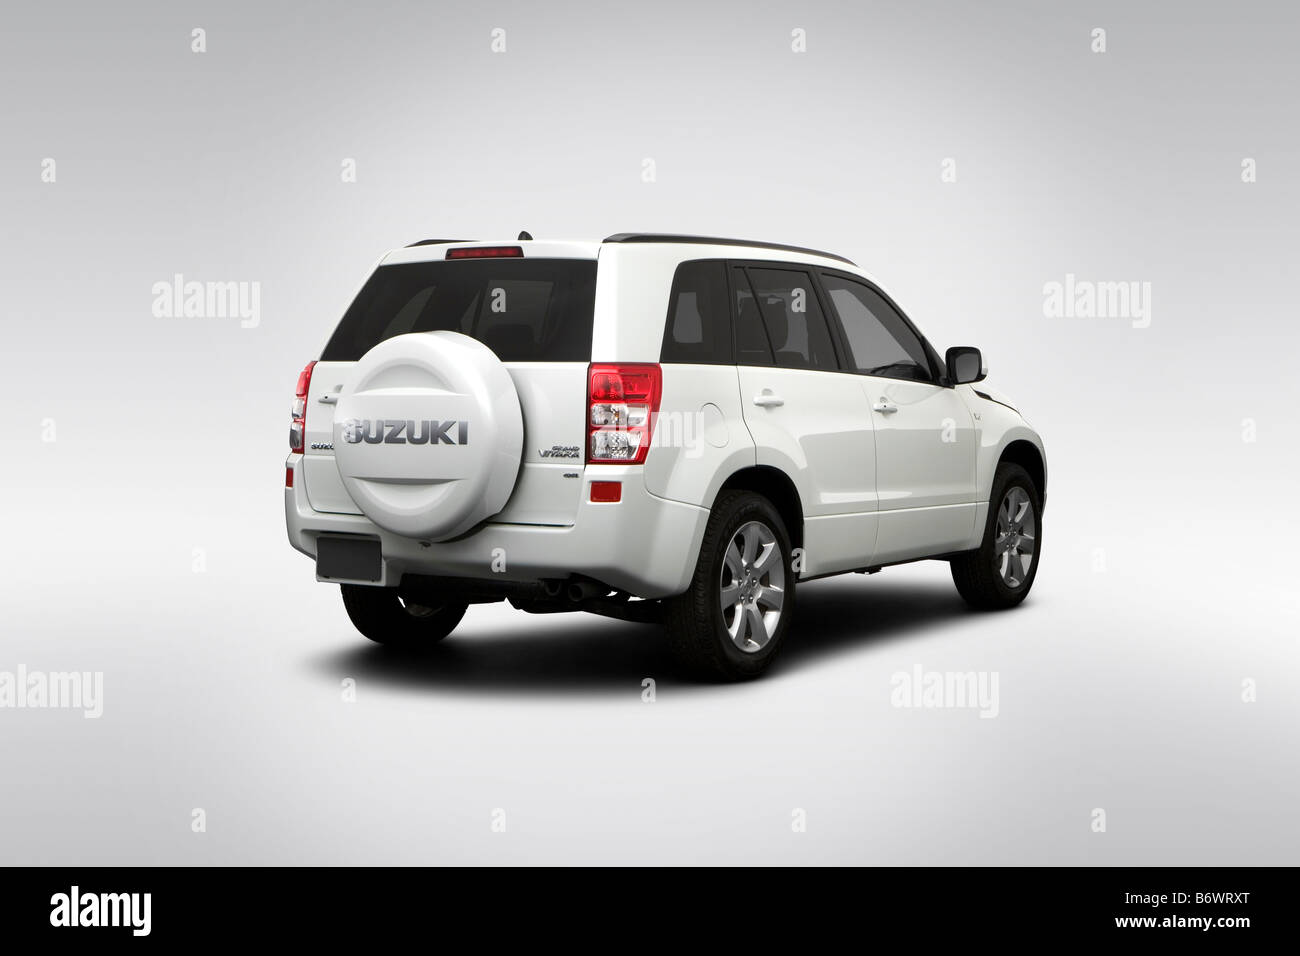 Suzuki vitara hi-res stock photography and images - Alamy